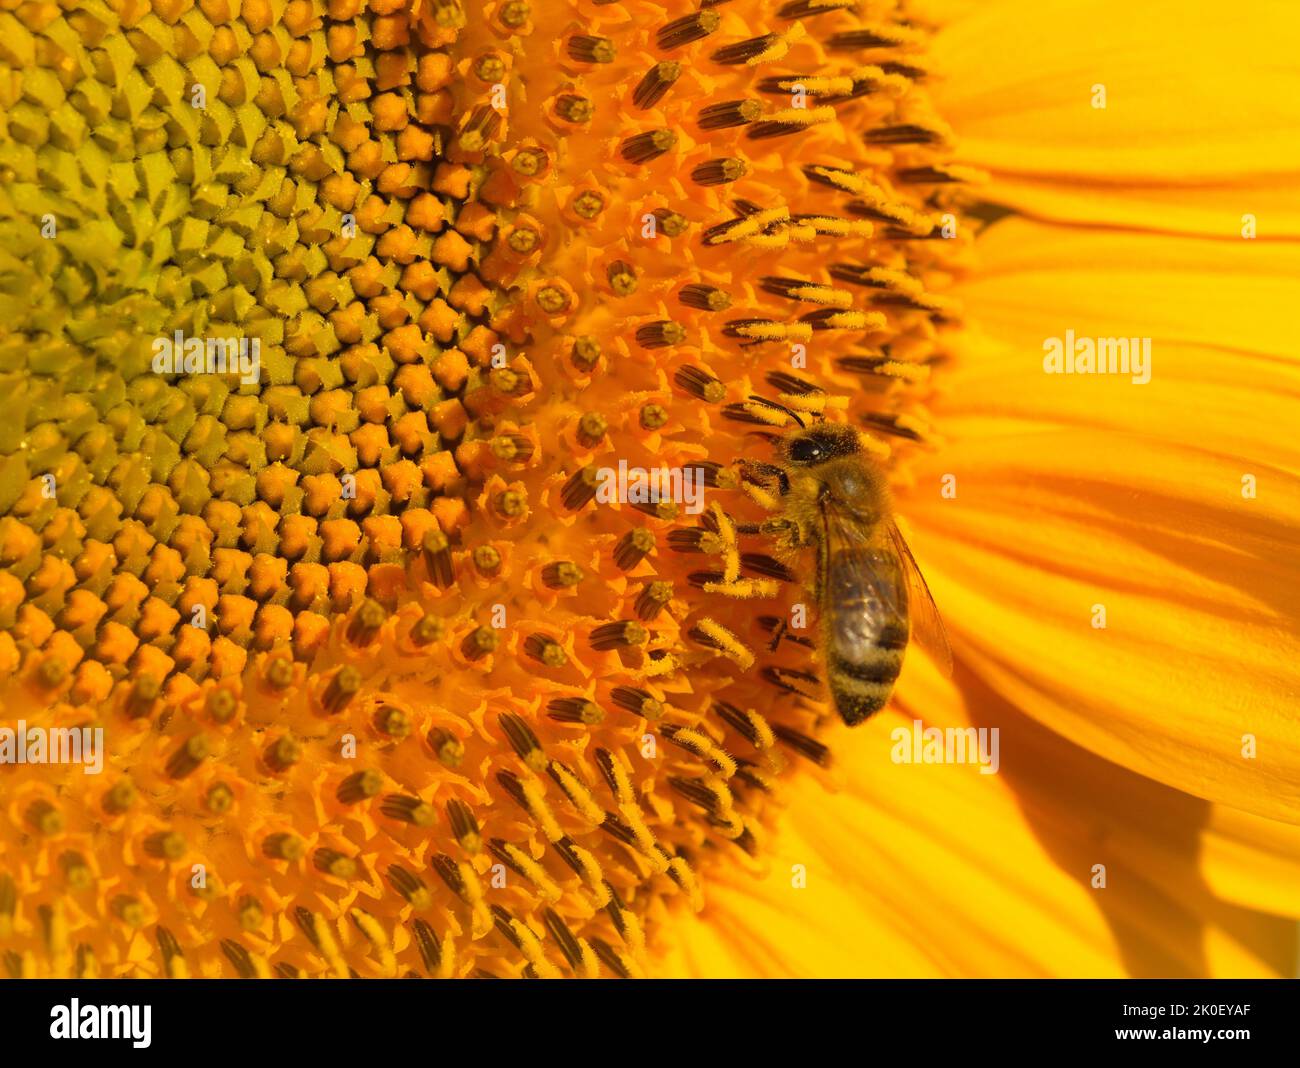 Macro of a honey bee on a sunflower Stock Photo